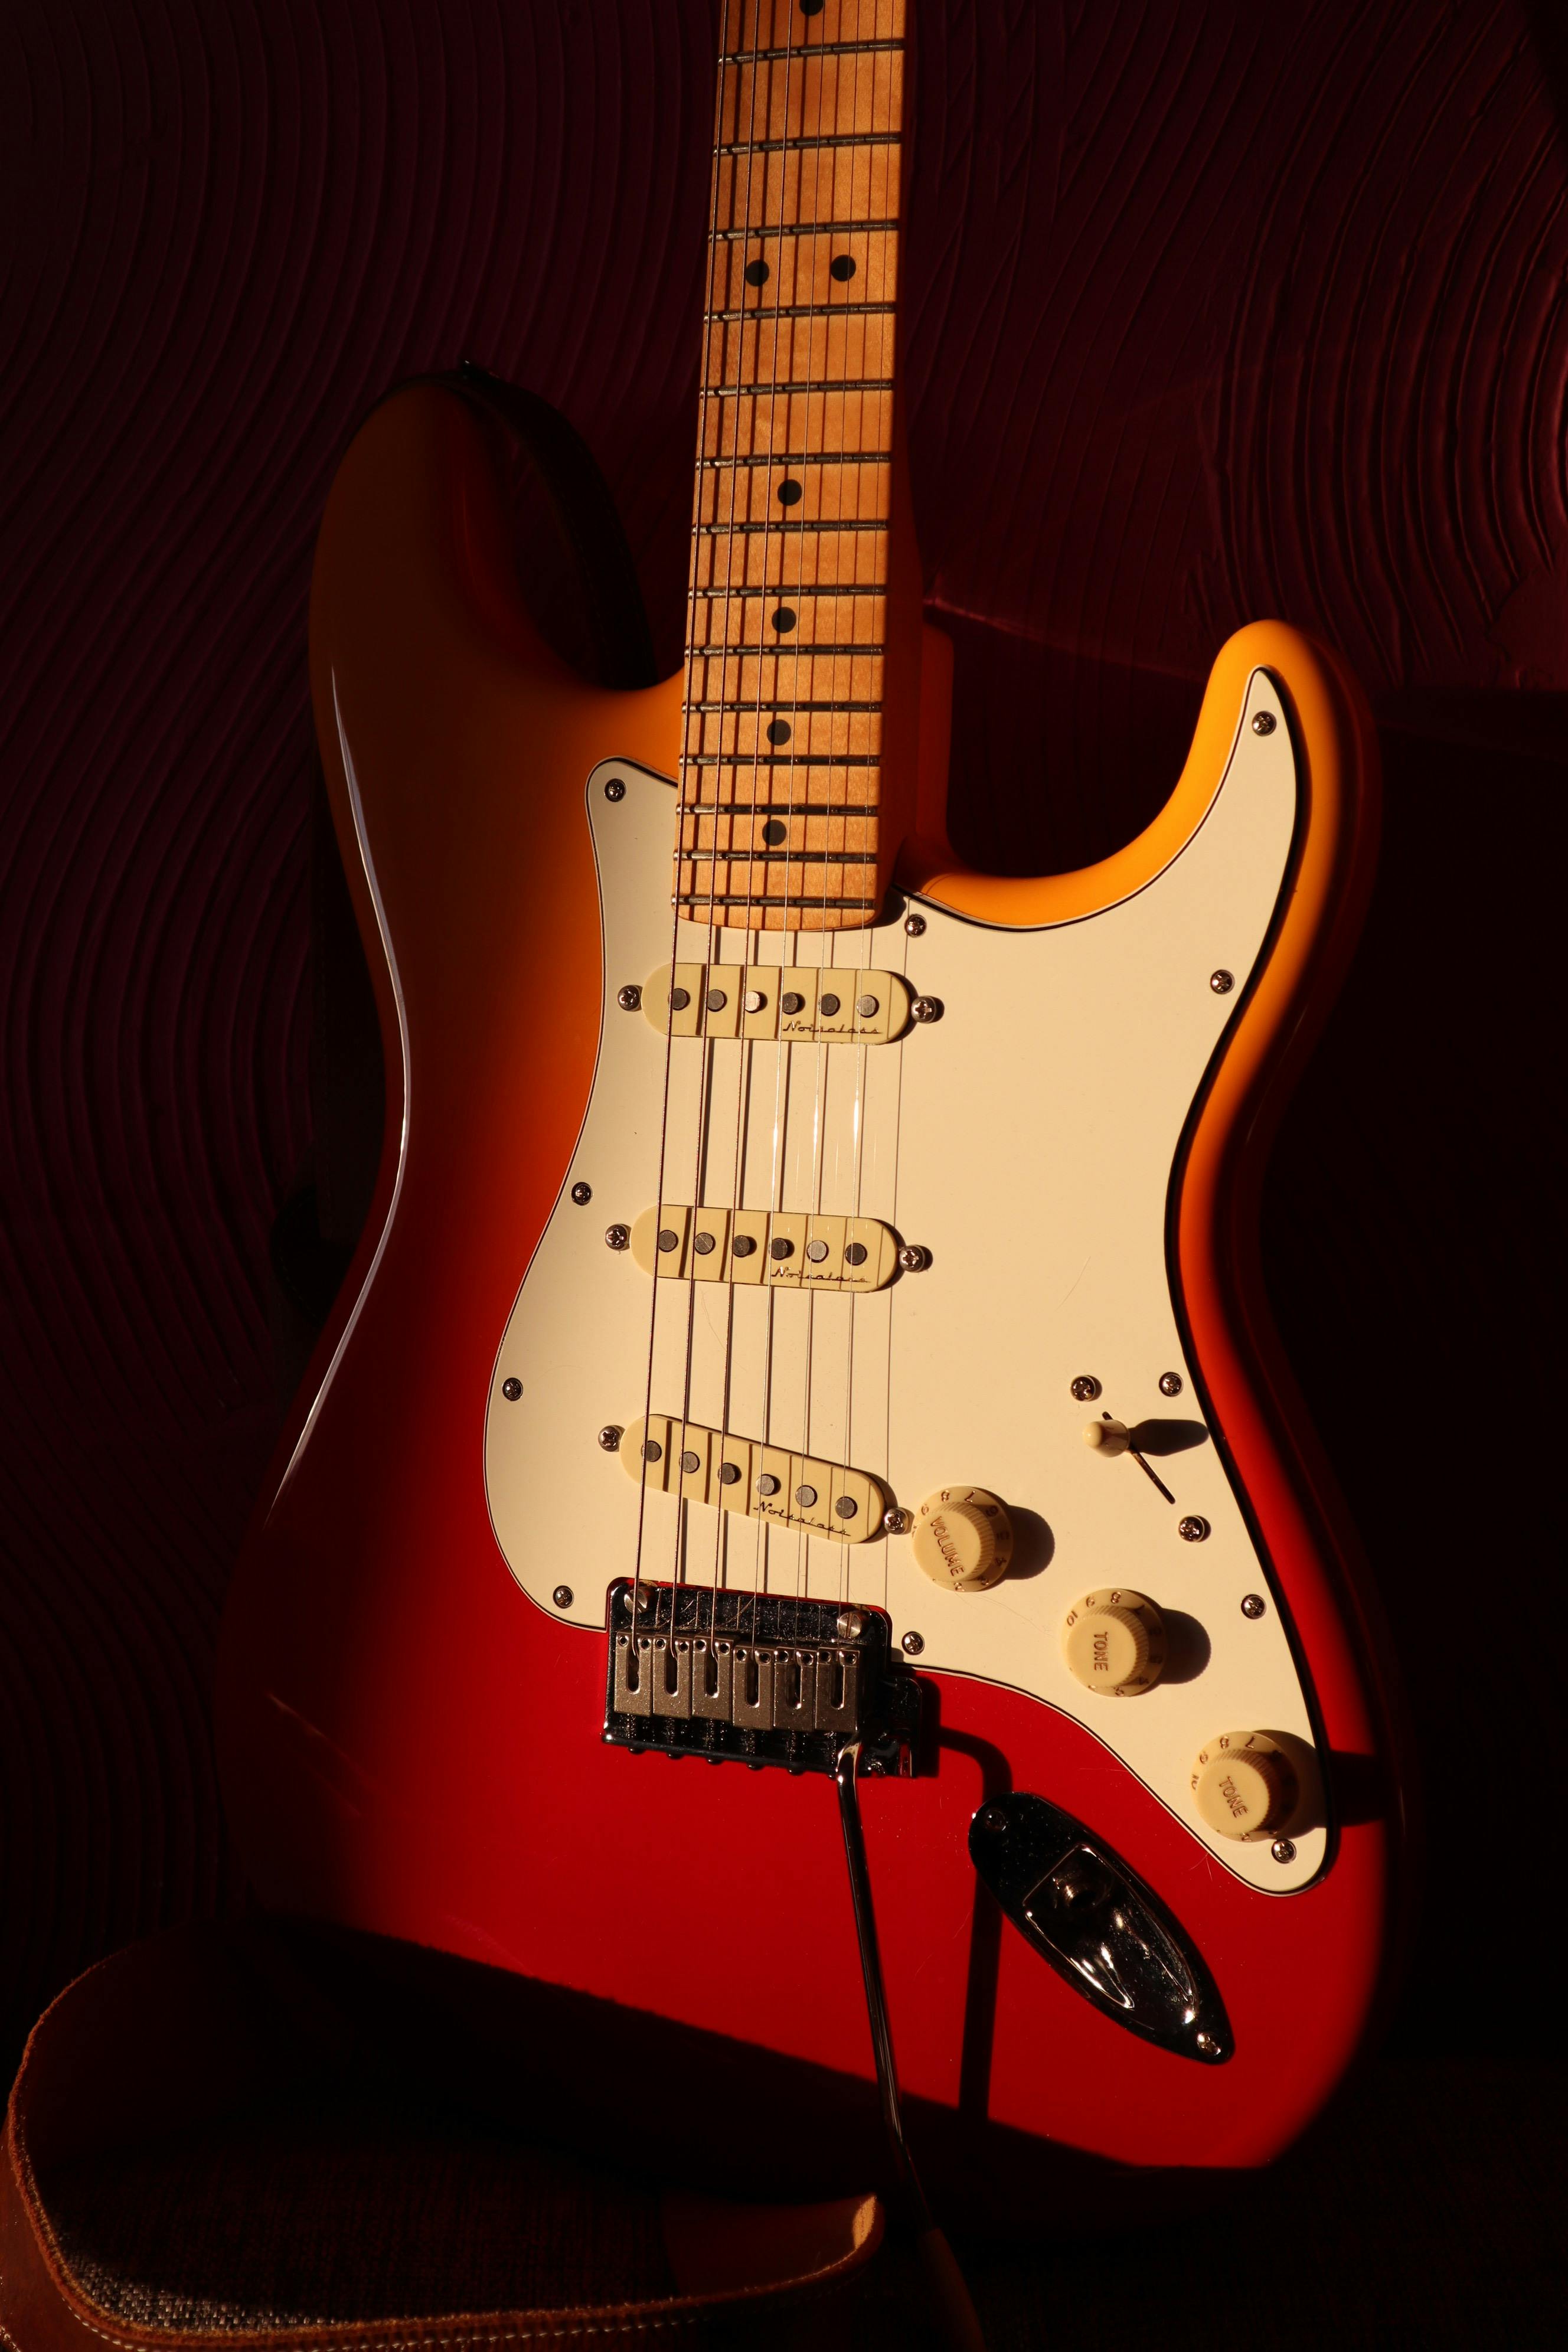 HD wallpaper Rockstar Music Guitar Fender Telecaster Rock and Roll   Wallpaper Flare